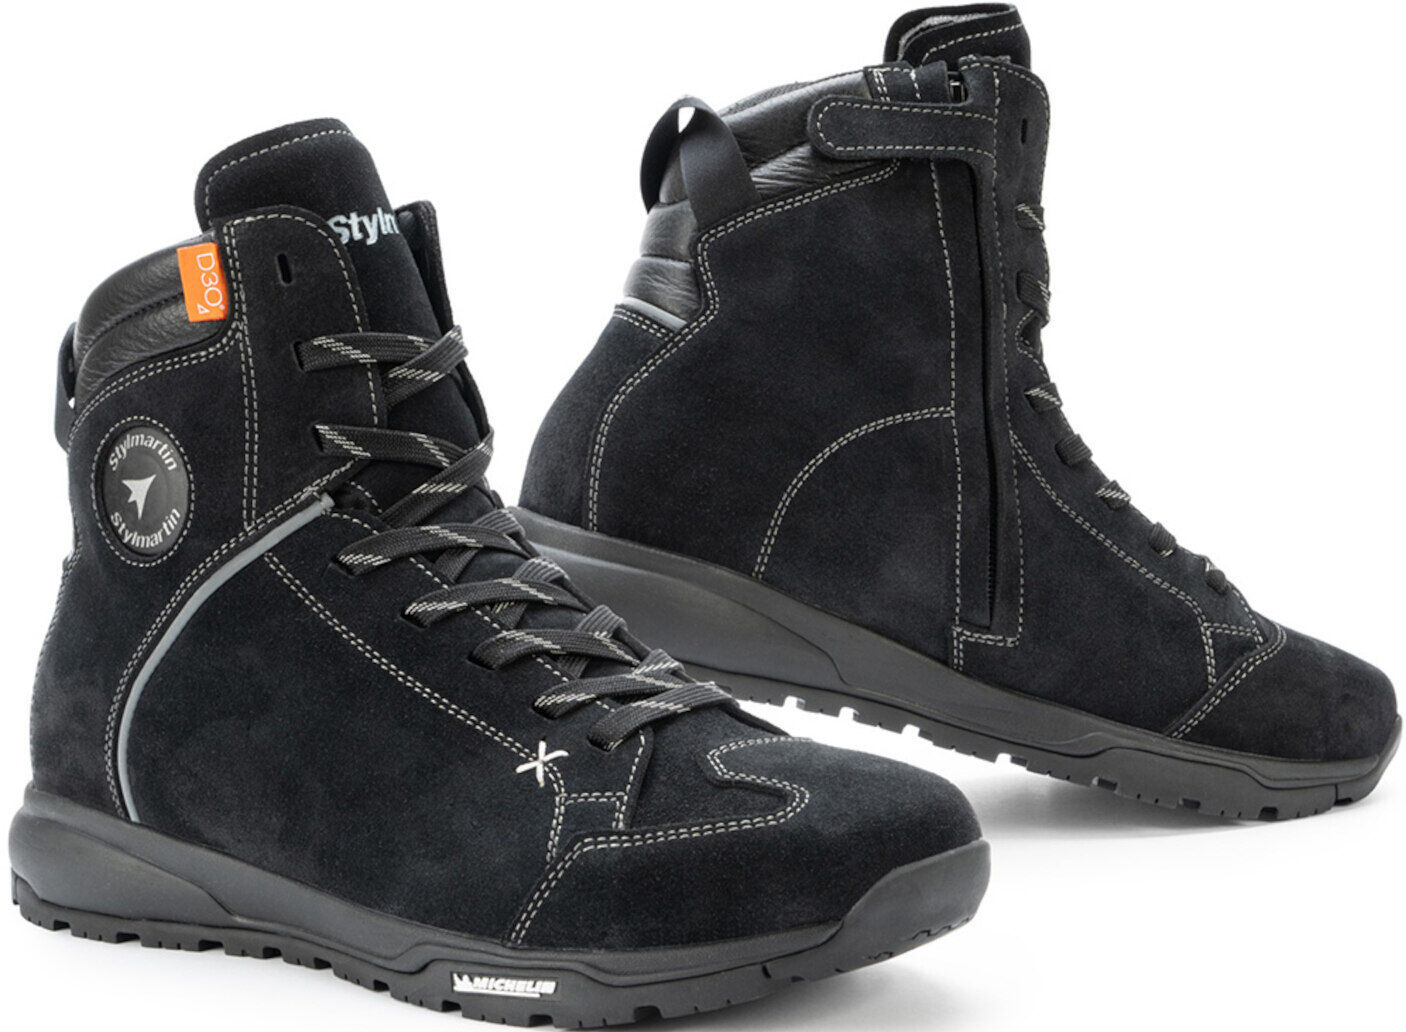 Stylmartin Zed Zapatos de moto impermeables - Negro (39)